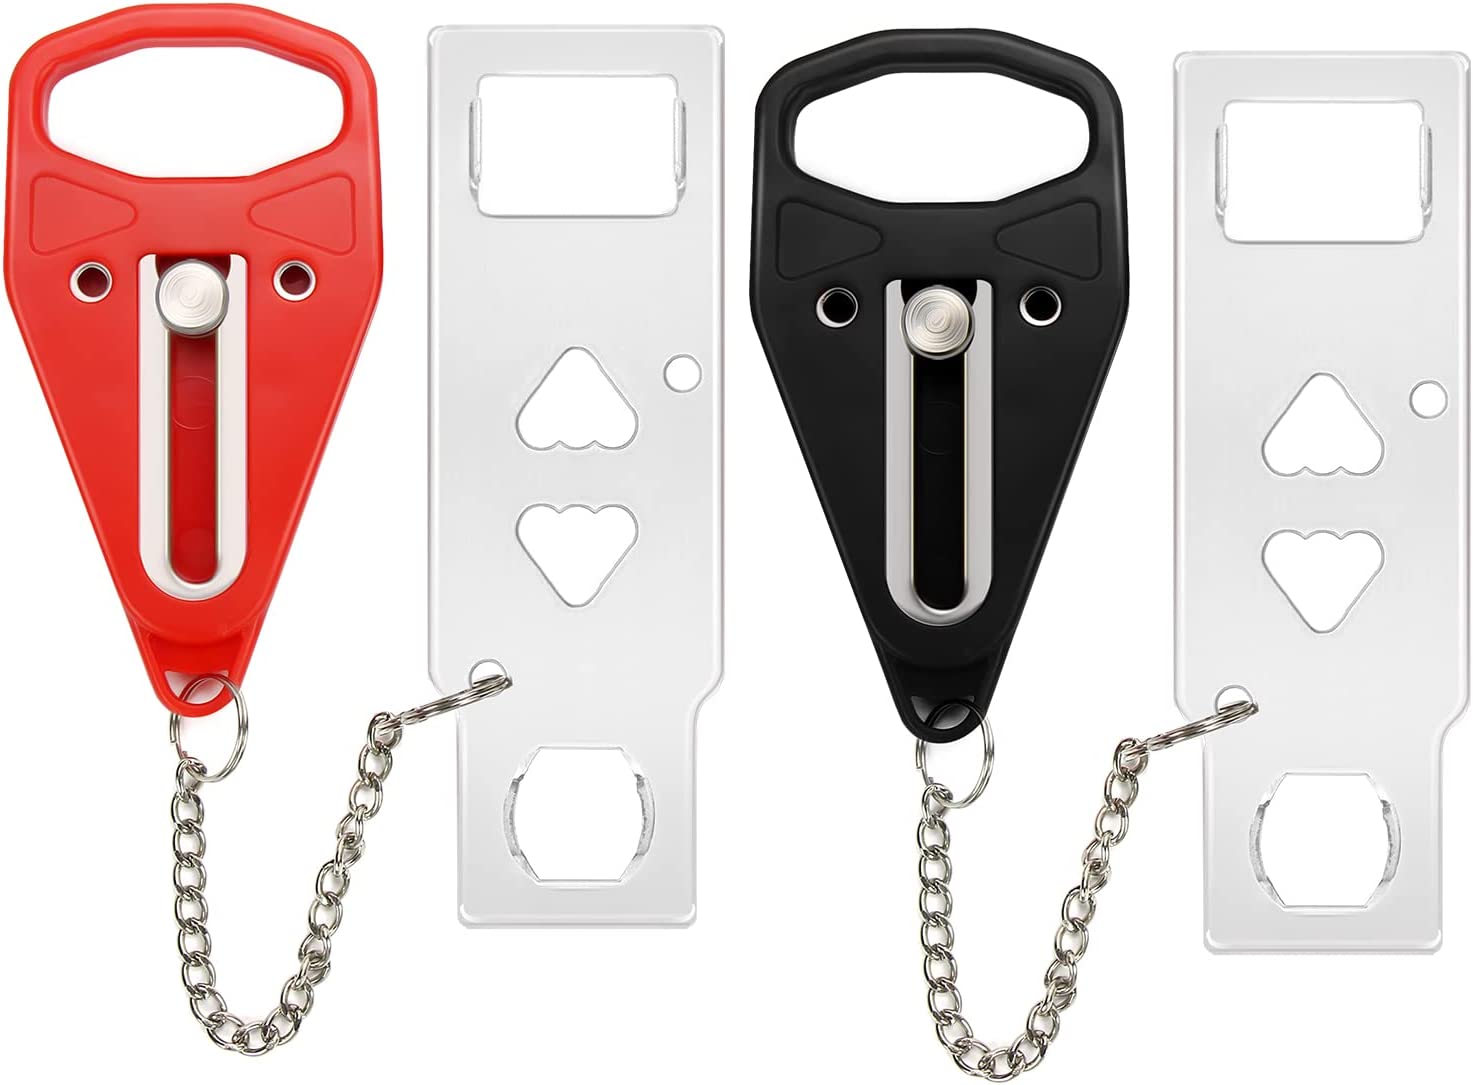 Portable Door Lock WholeSale - Price List, Bulk Buy at